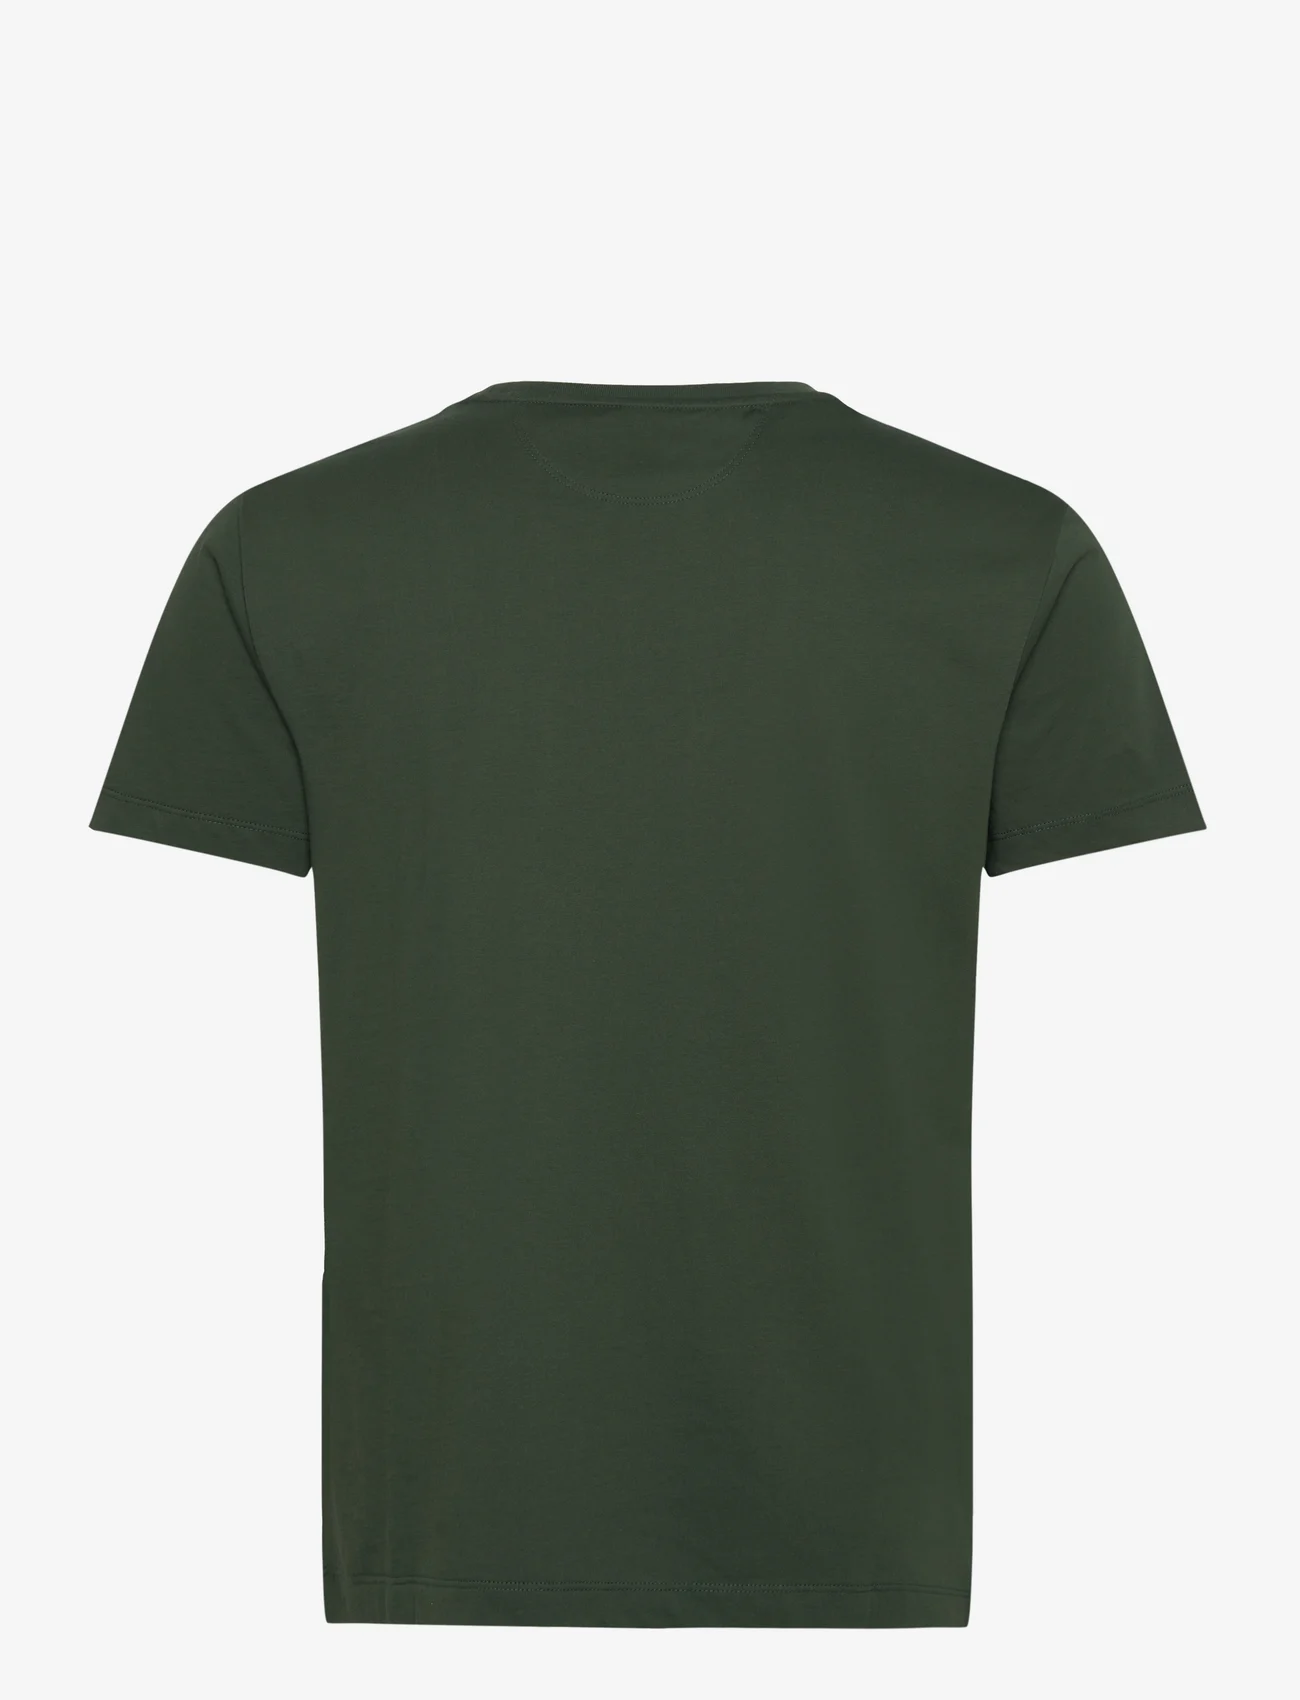 Hackett London - PIMA COTTON TEE - basic t-shirts - dark green - 1